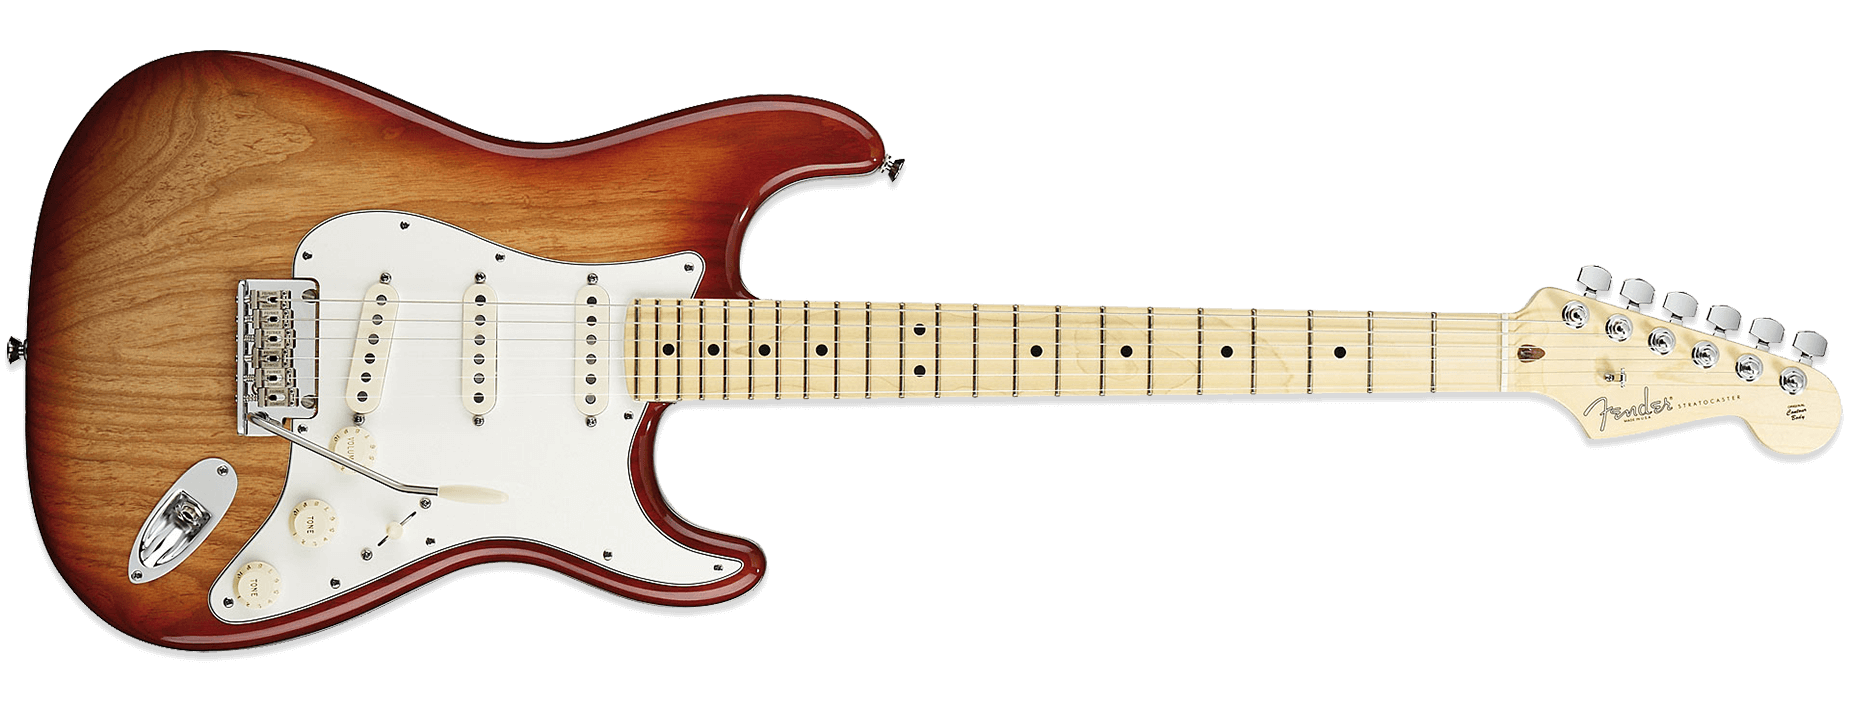 Fender American Standard Stratocaster 2012 Sienna Sunburst